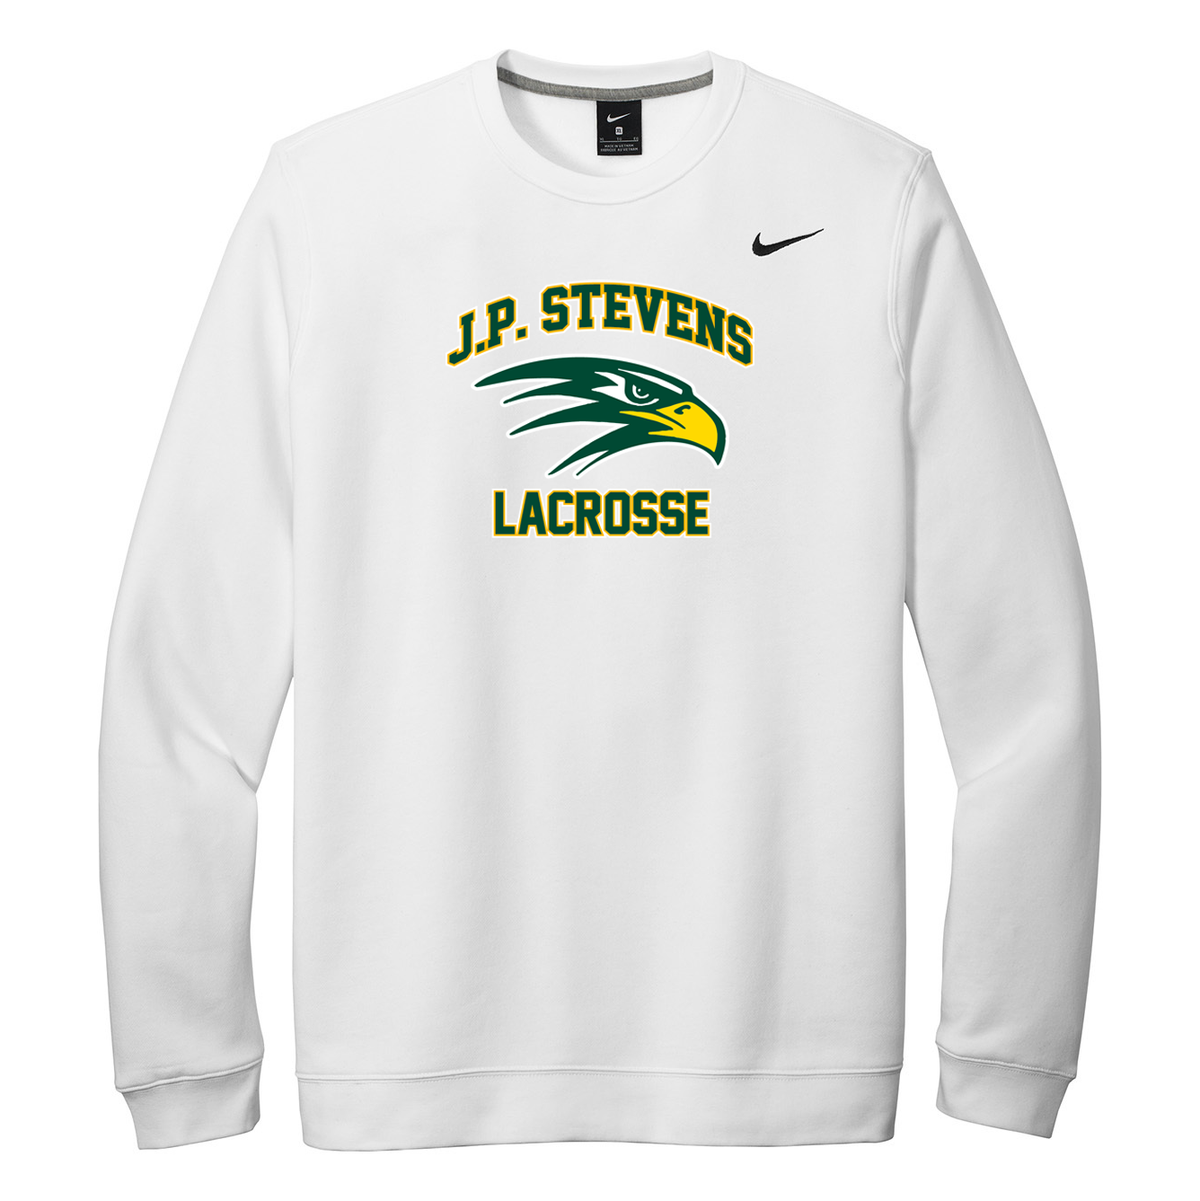 J.P. Stevens Lacrosse Nike Fleece Crew Neck